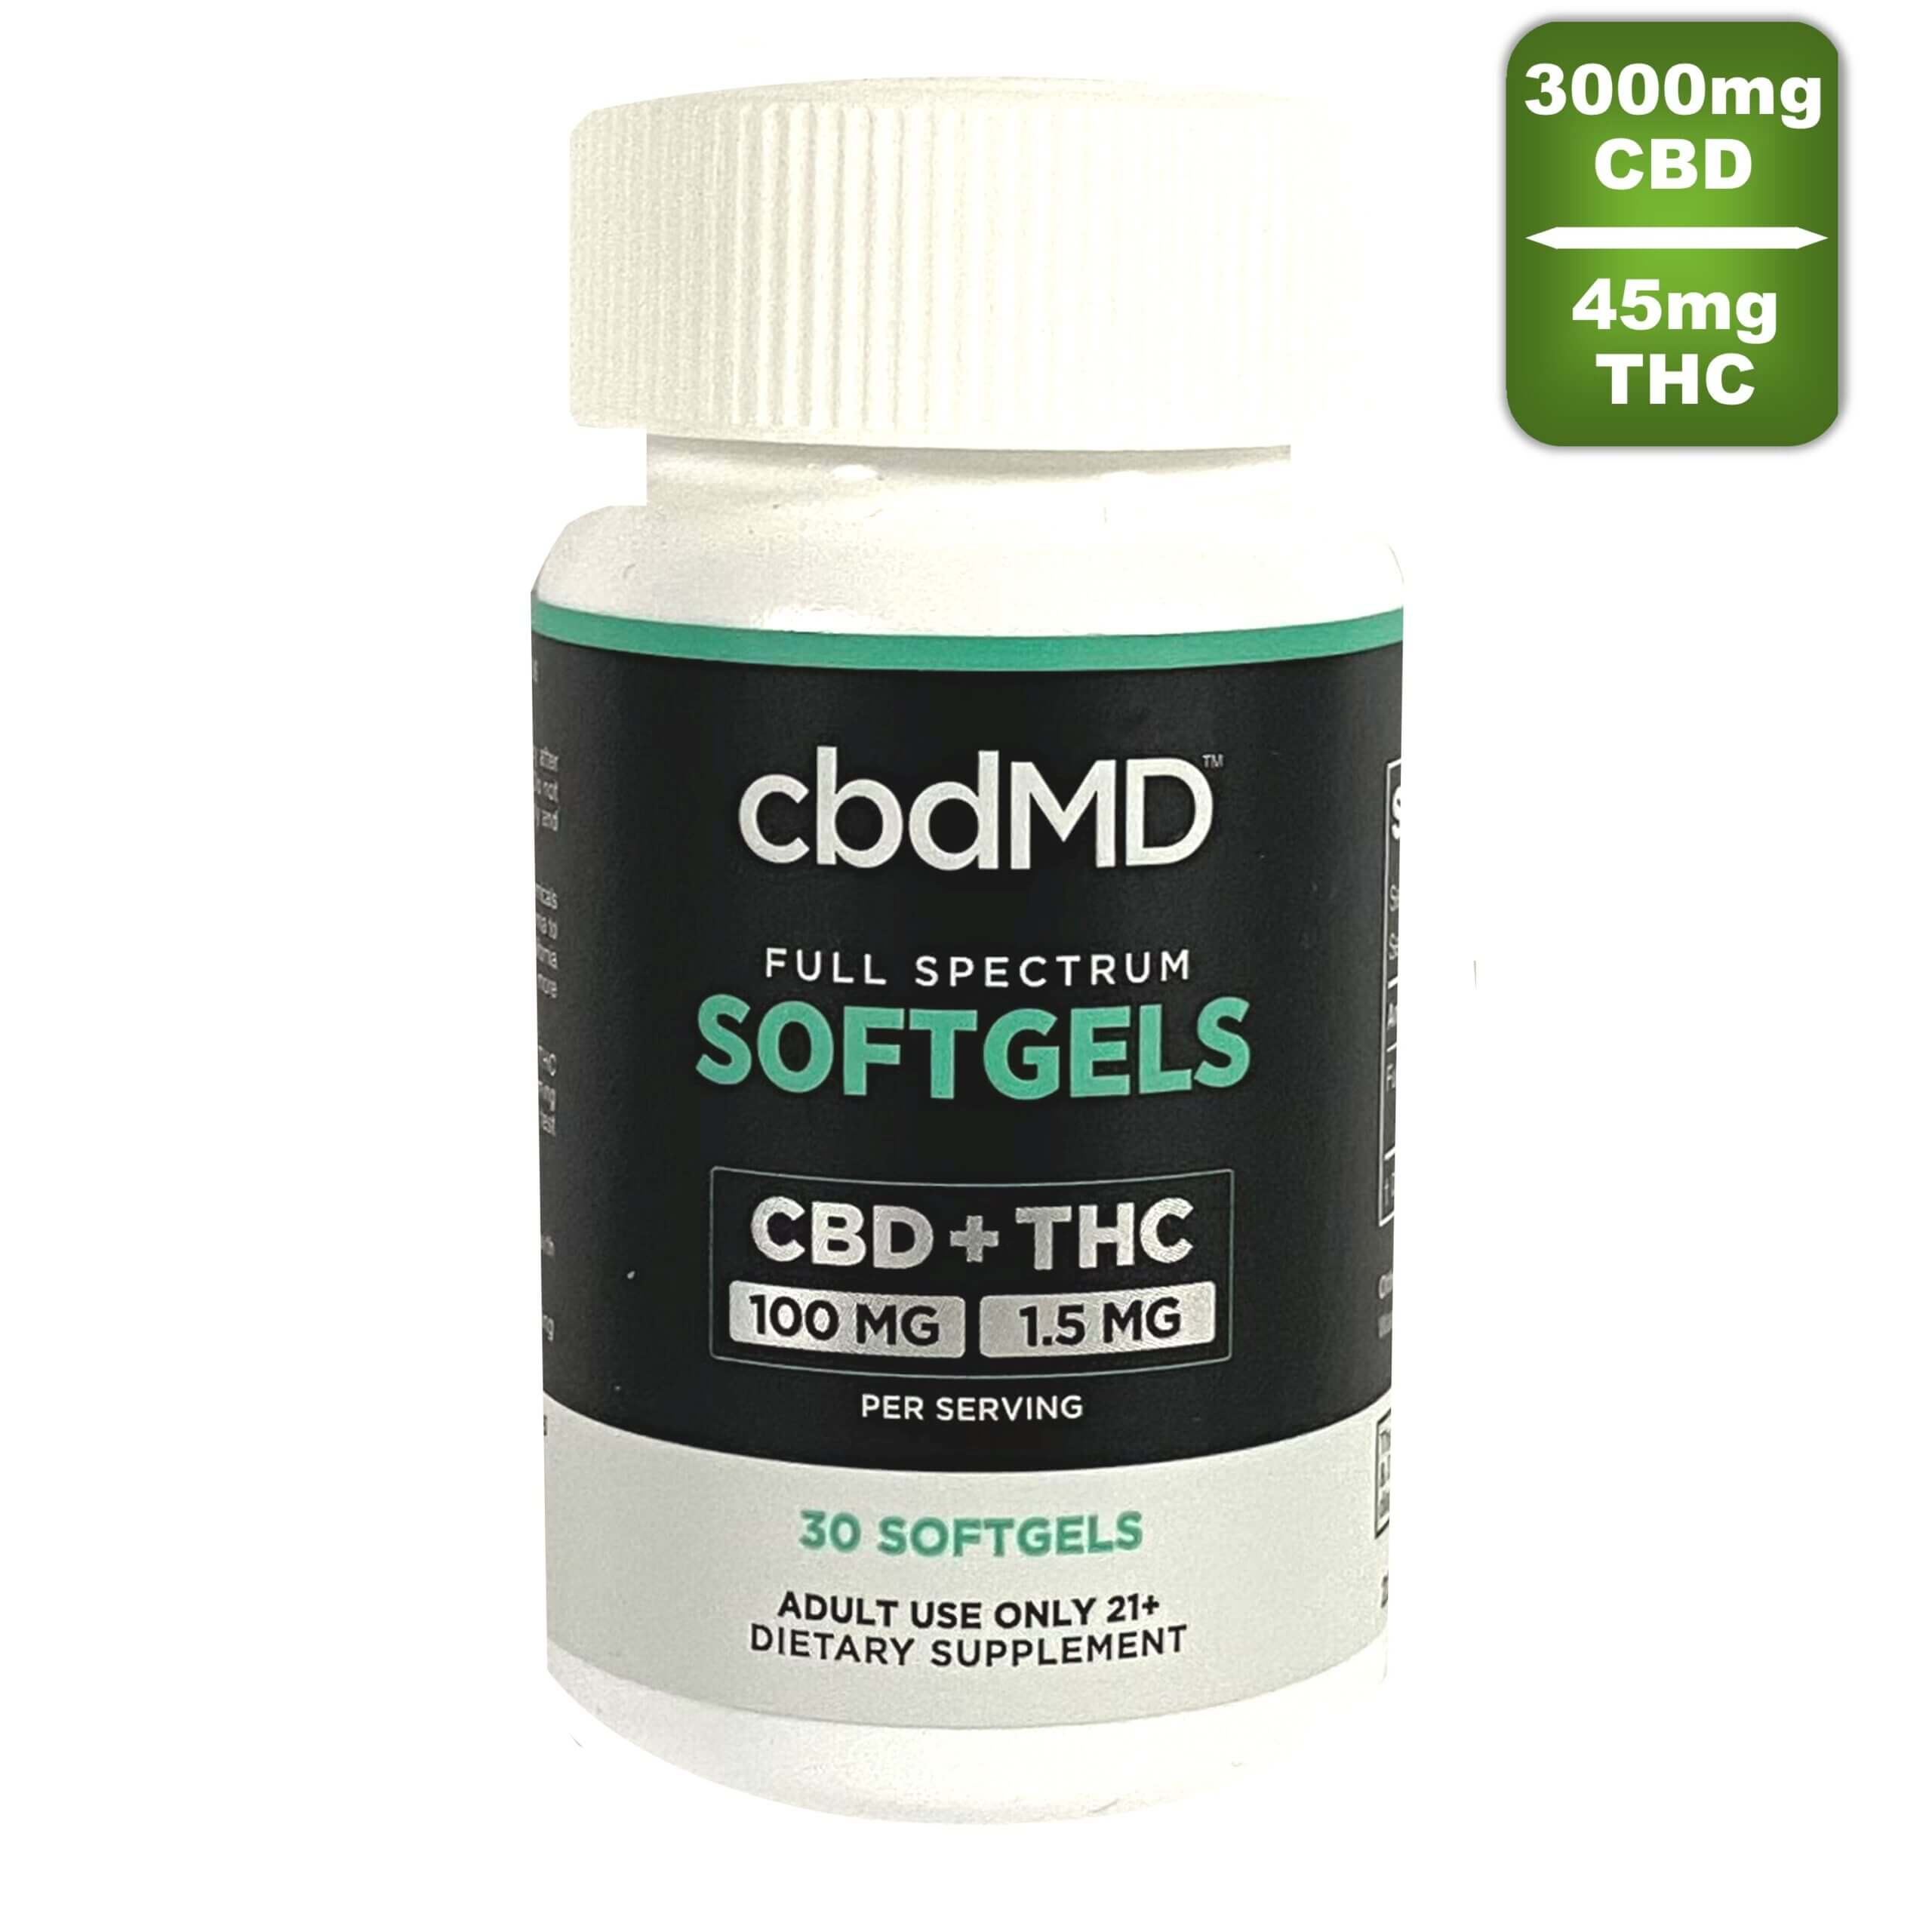 cbdmd -CBD Softgels - 3000mg CBD + THC - full spectrum - 30 count